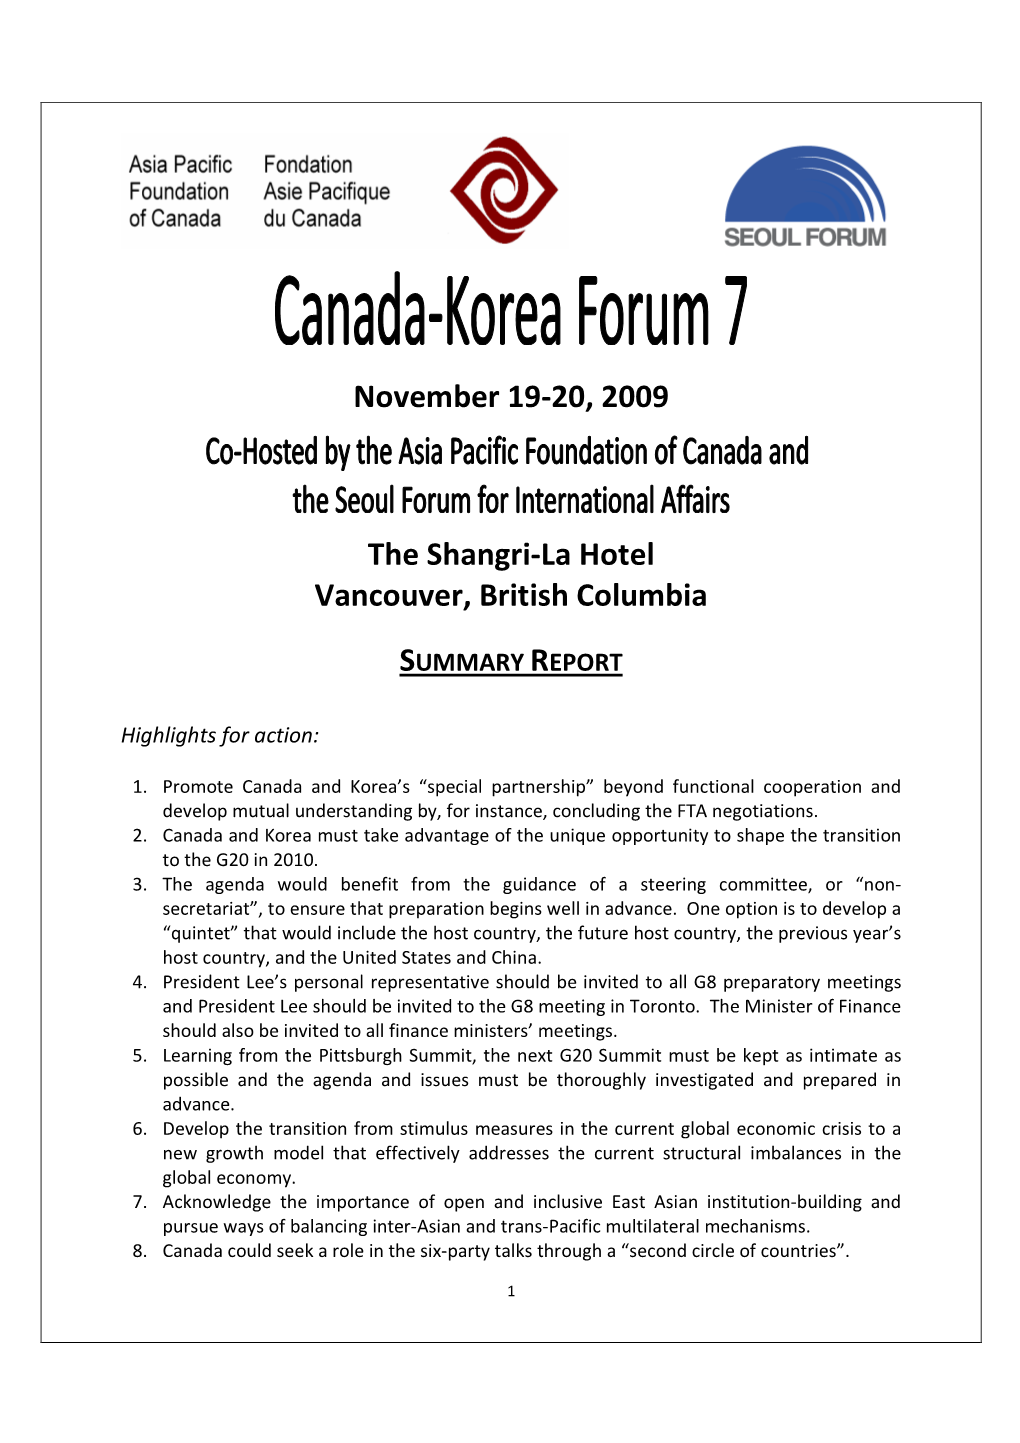 Canada-Korea Forum 7: Summary Report